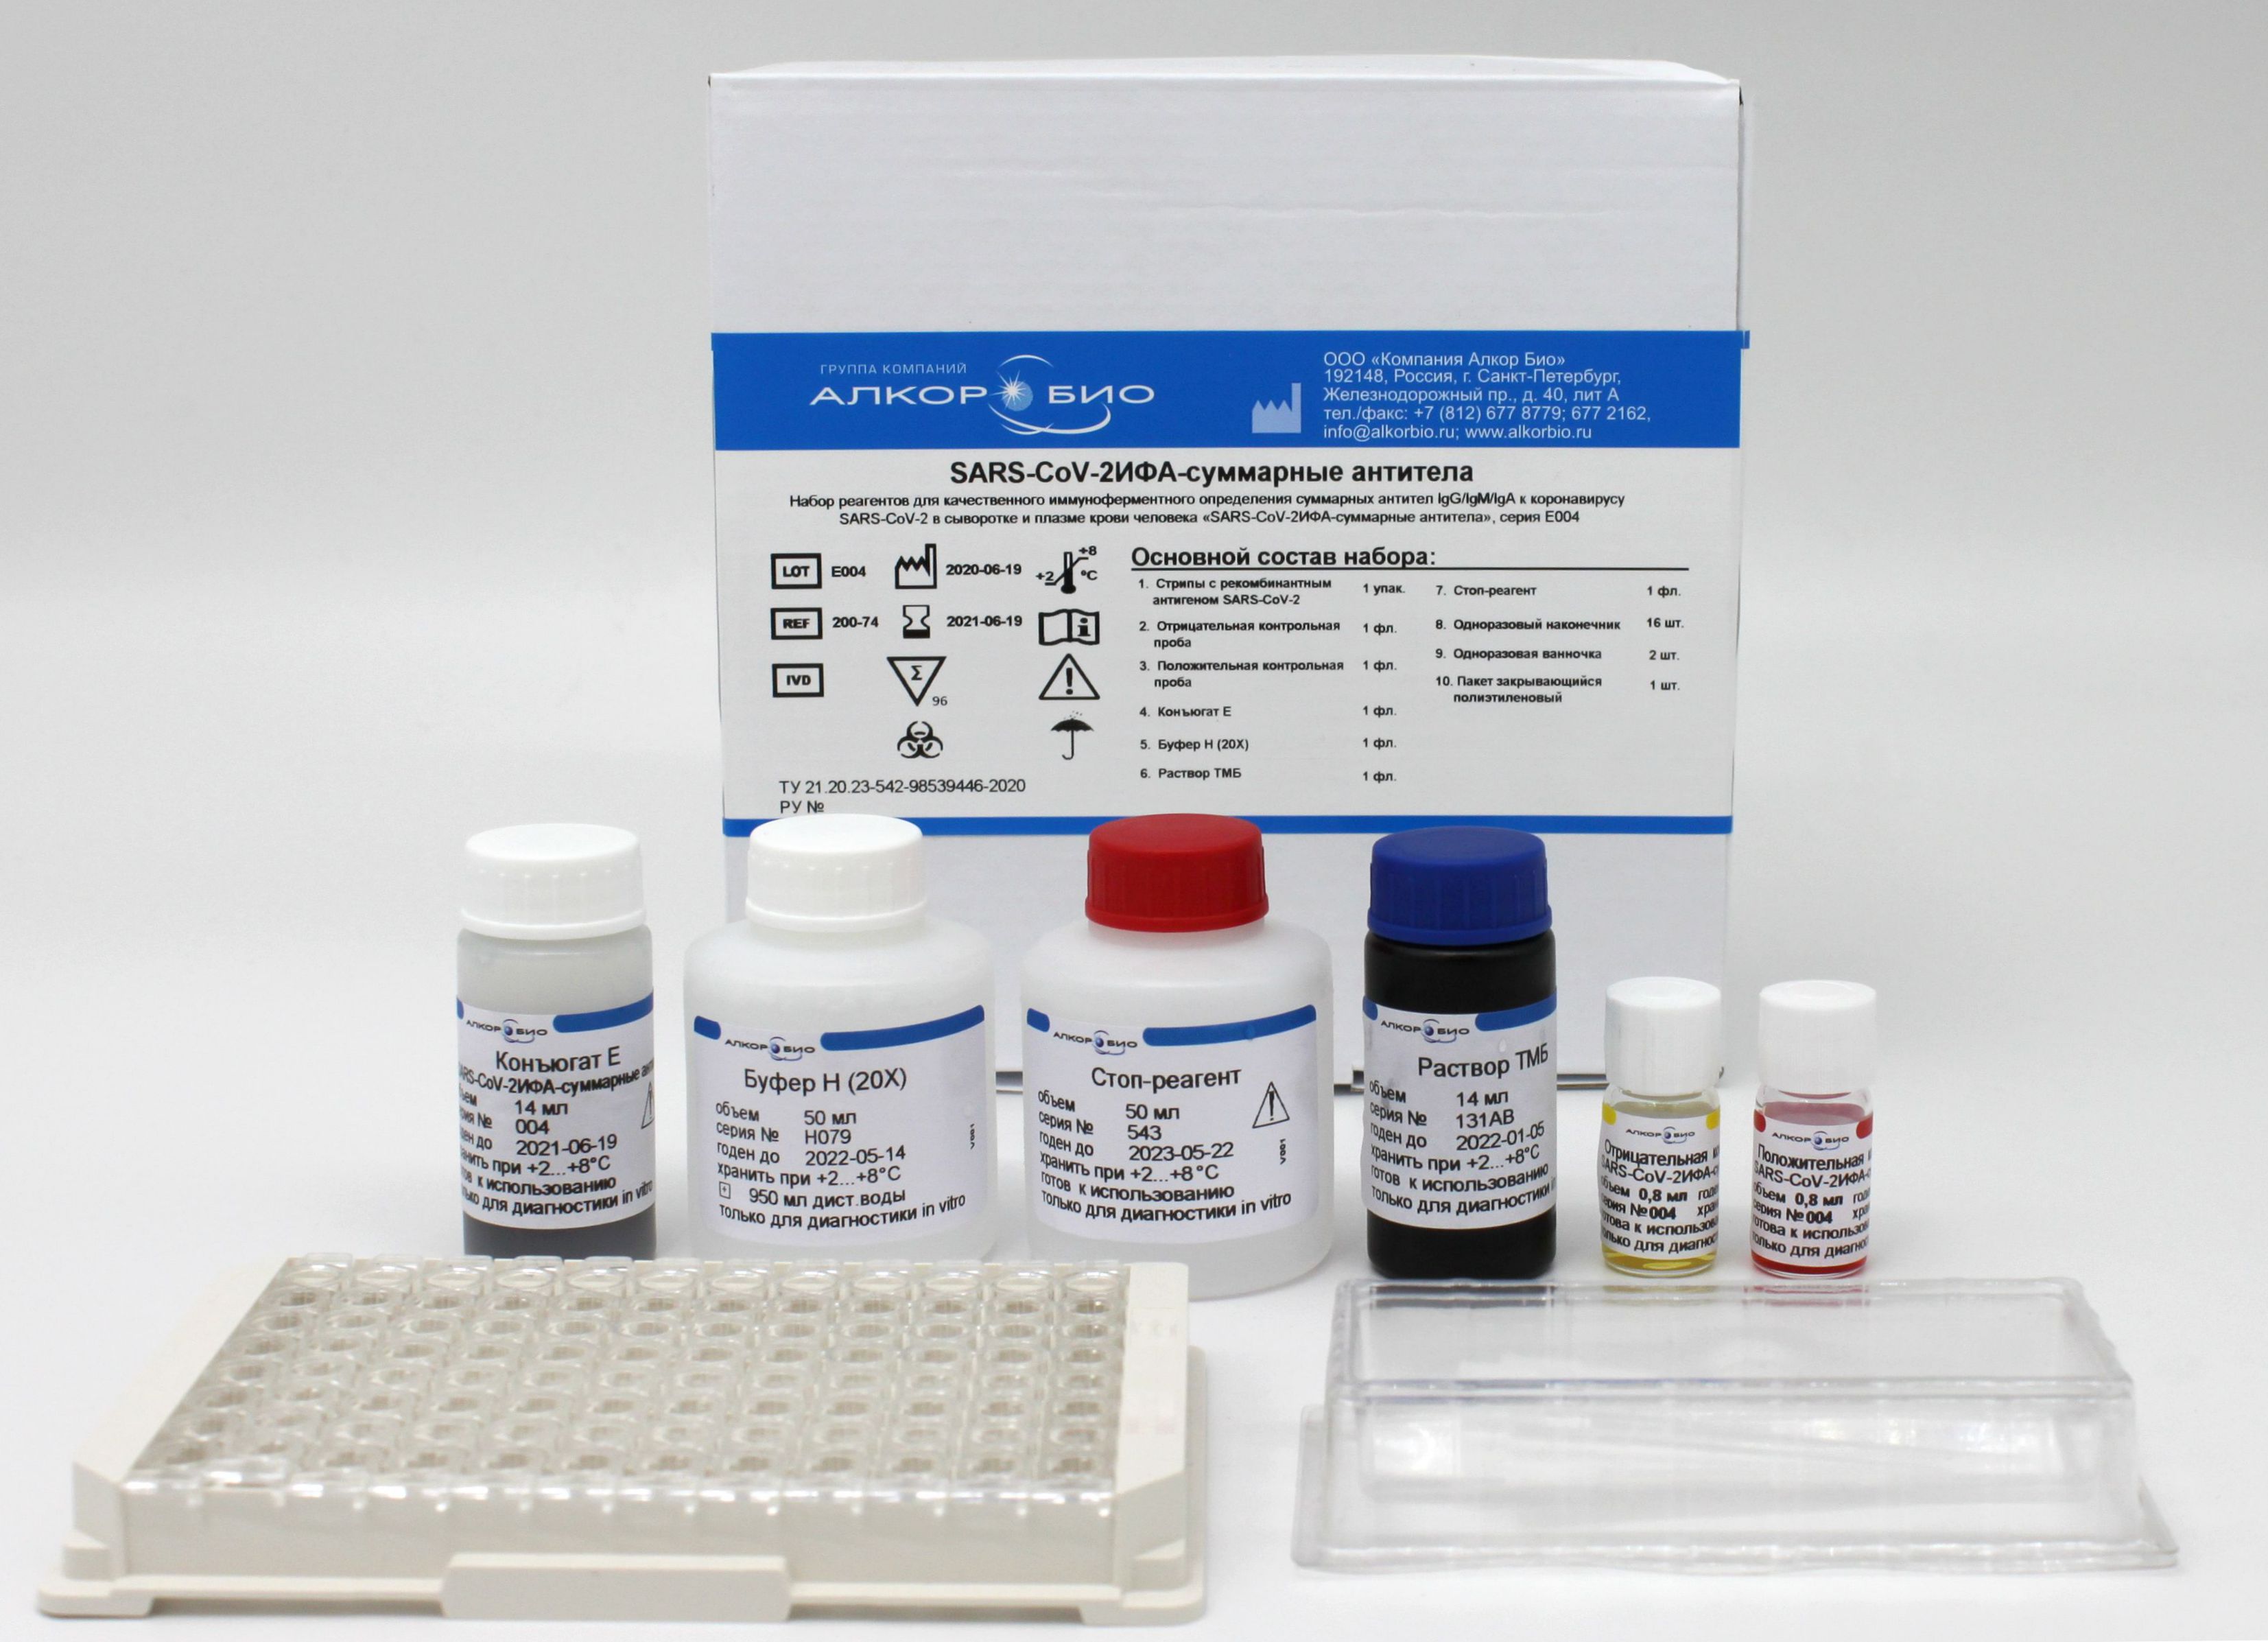 Иммуноглобулин на коклюш. Наборы Алкор био ИФА. Набор реагентов SARS-cov-2 ПЦР. Набор реагентов "ДС-ИФА-анти-HCV-спектр-GM" С-452. Набор для выявления антител методом ИФА.